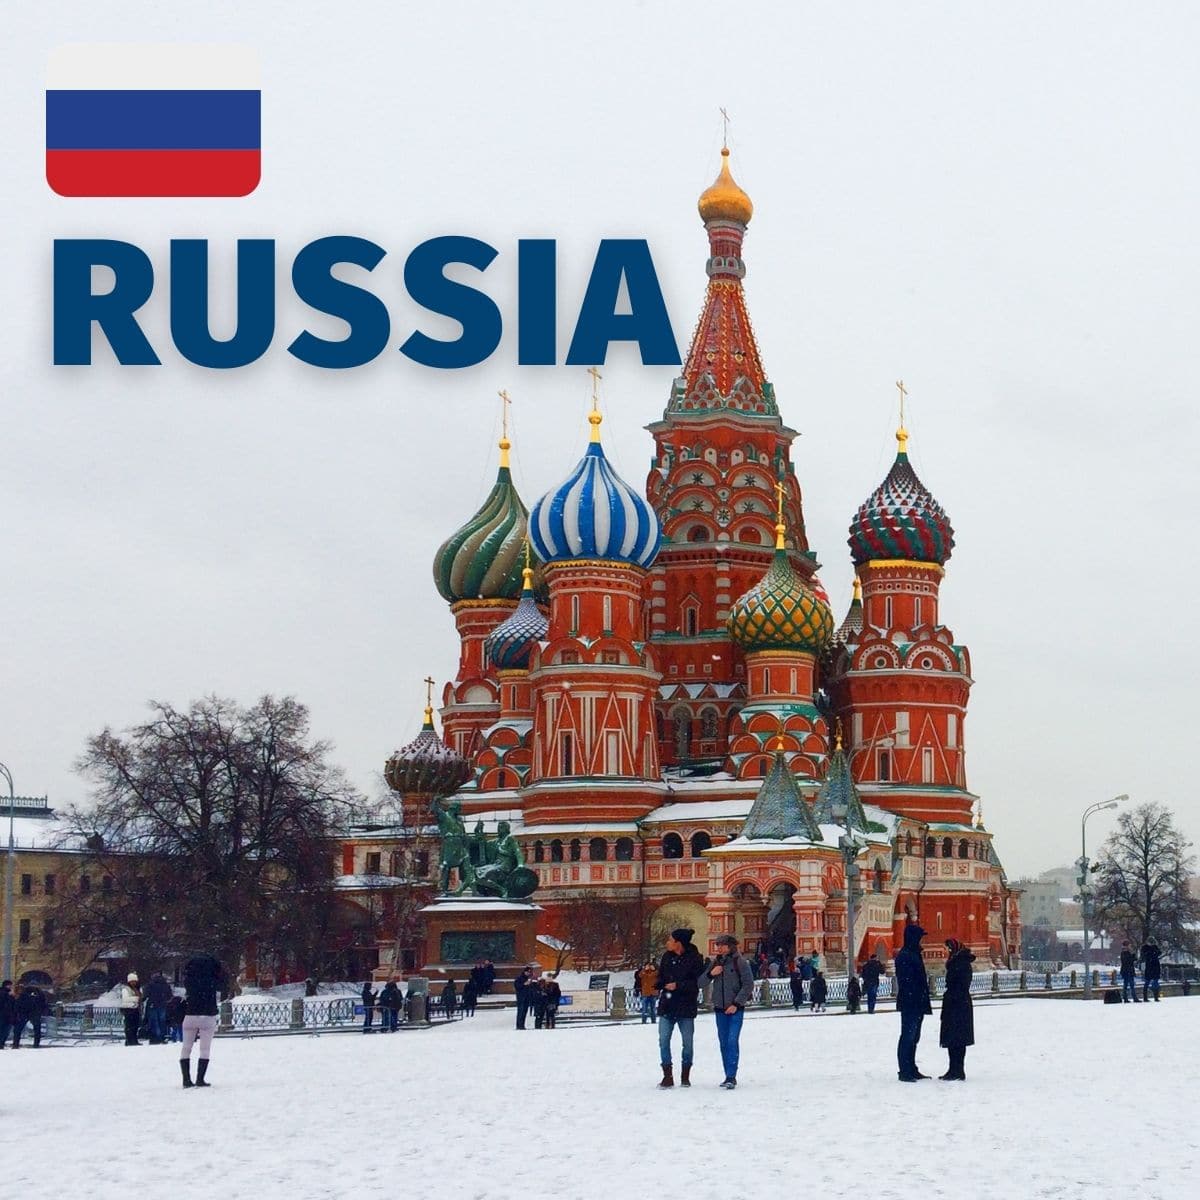 Russia Visa Faster from Dubai